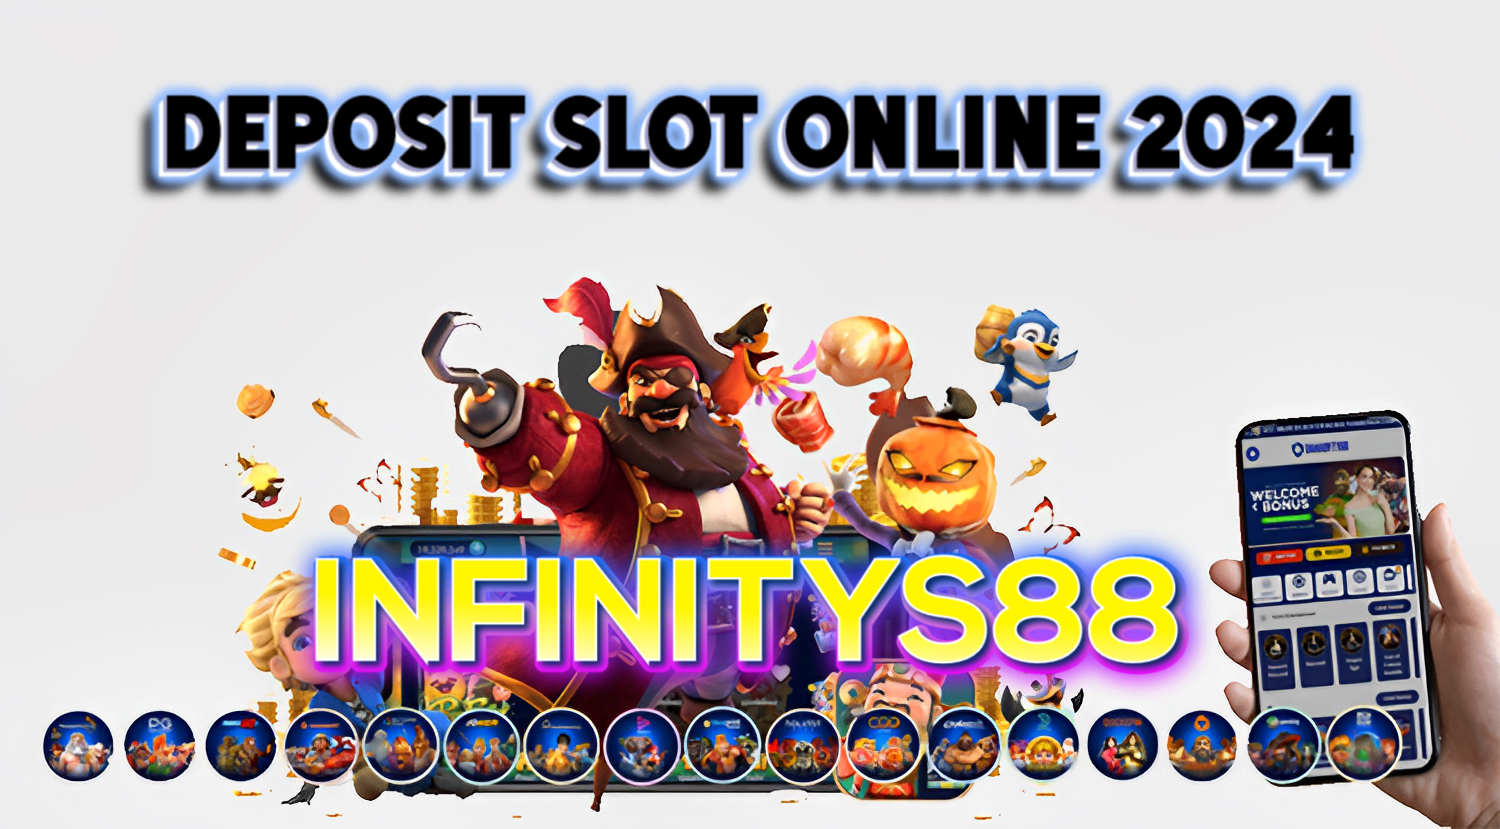 Deposit Slot Online 2024